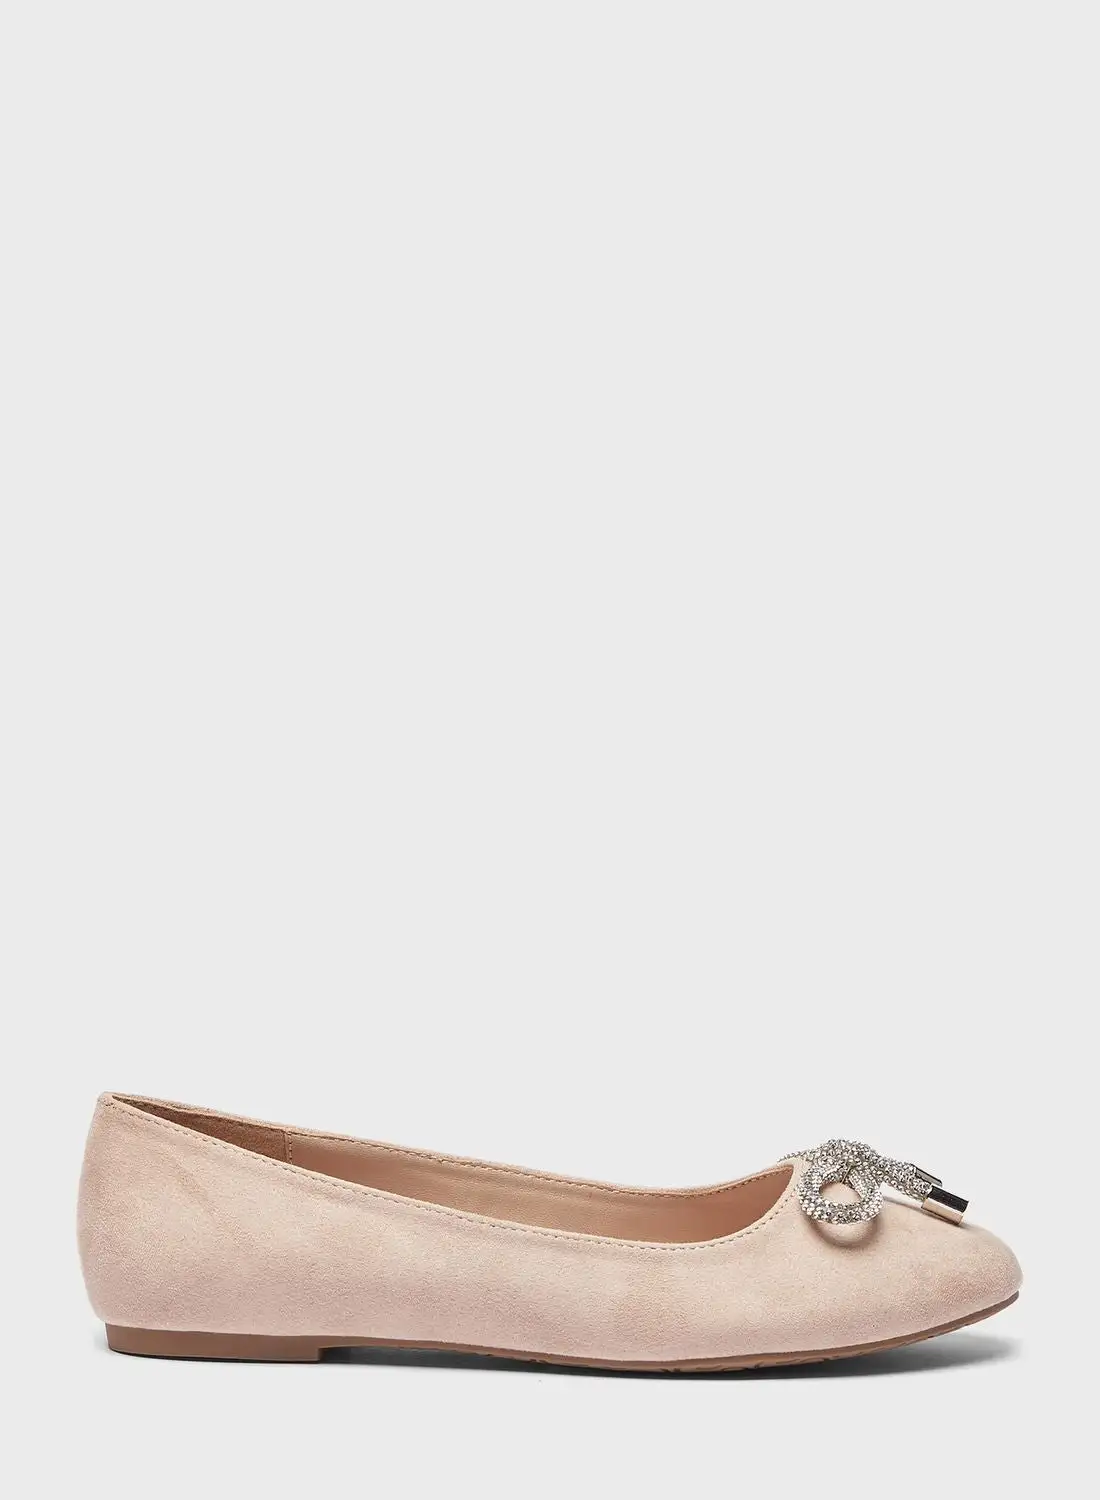 Celeste Pointed Toe Flat Ballerinas